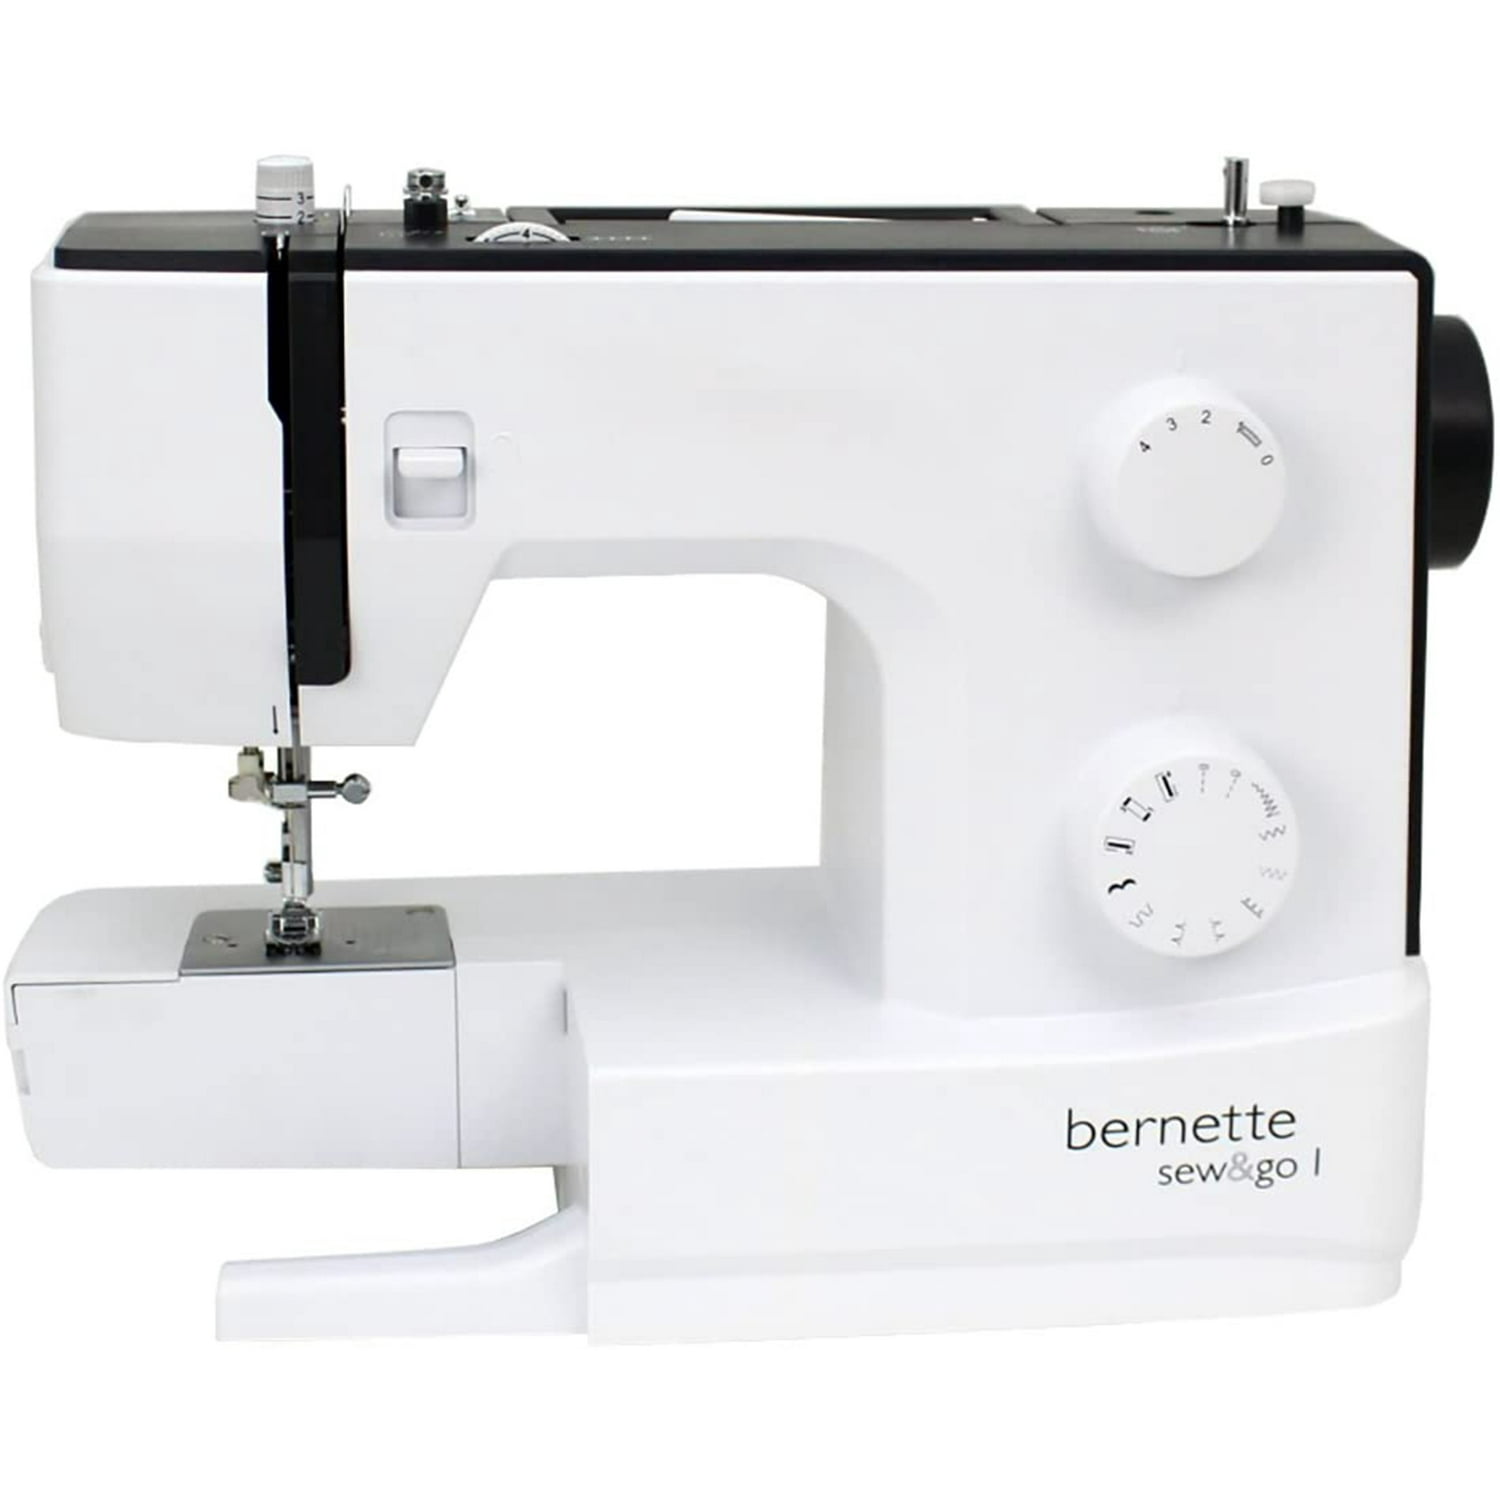 Bernette Sew & Go 1 Swiss Design Mechanical Sewing Machine $78.50 + Free Shipping